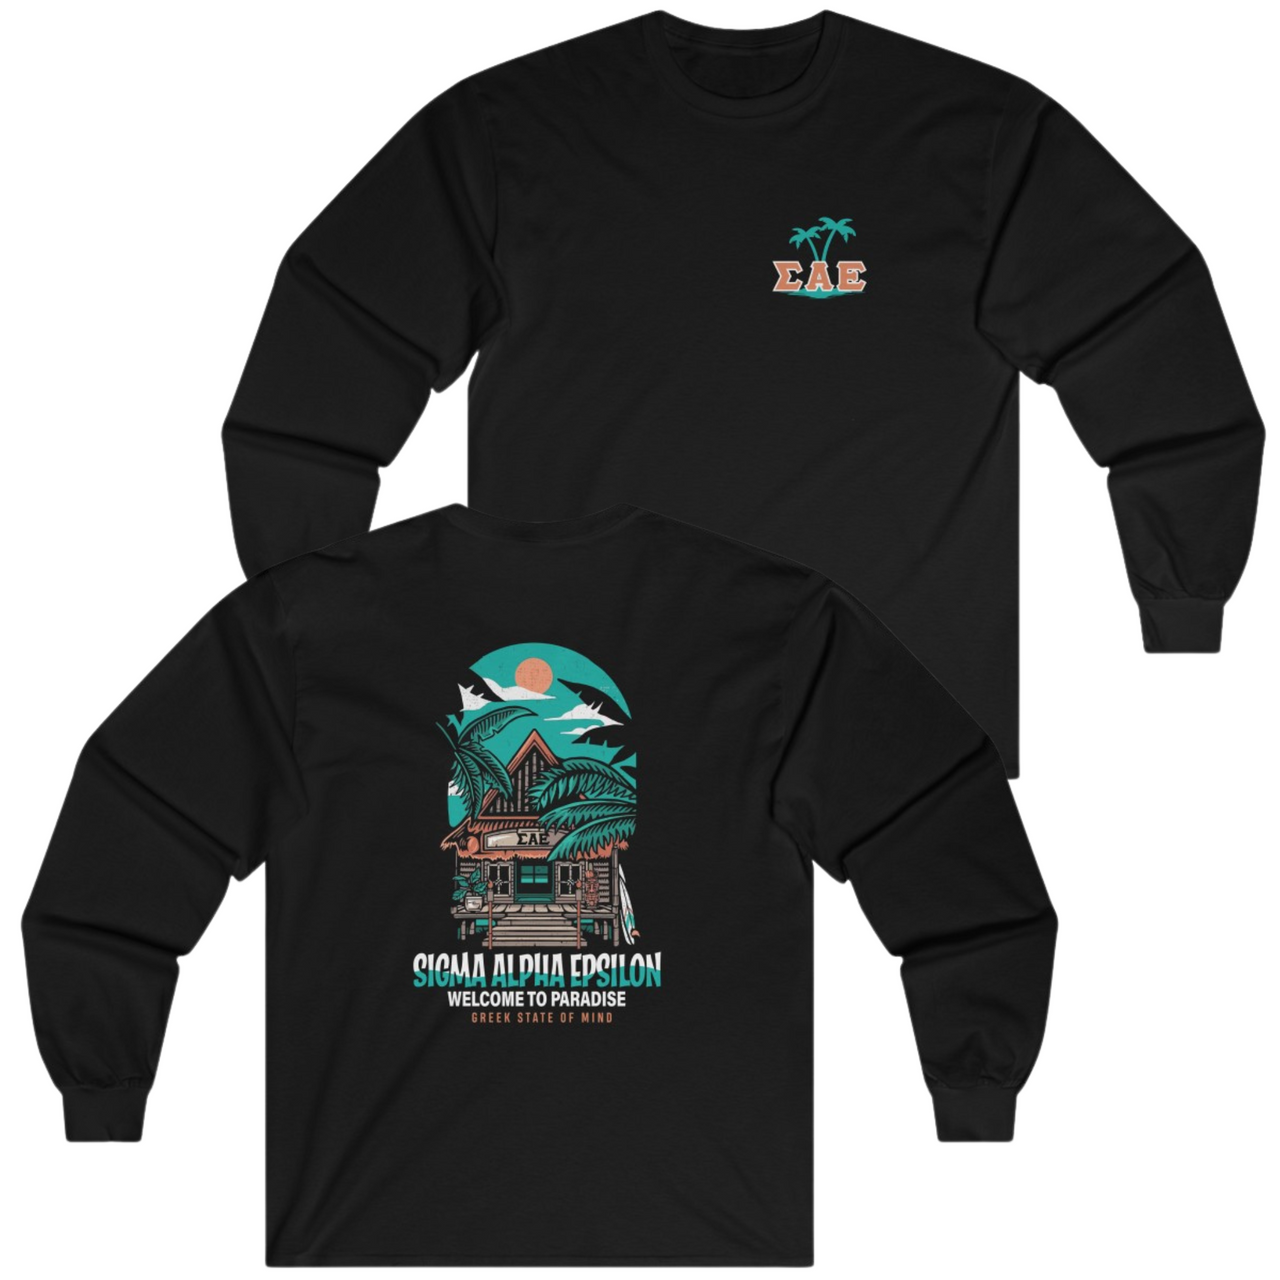 Black Sigma Alpha Epsilon Graphic Long Sleeve T-Shirt | Welcome to Paradise | Sigma Alpha Epsilon Clothing and Merchandise